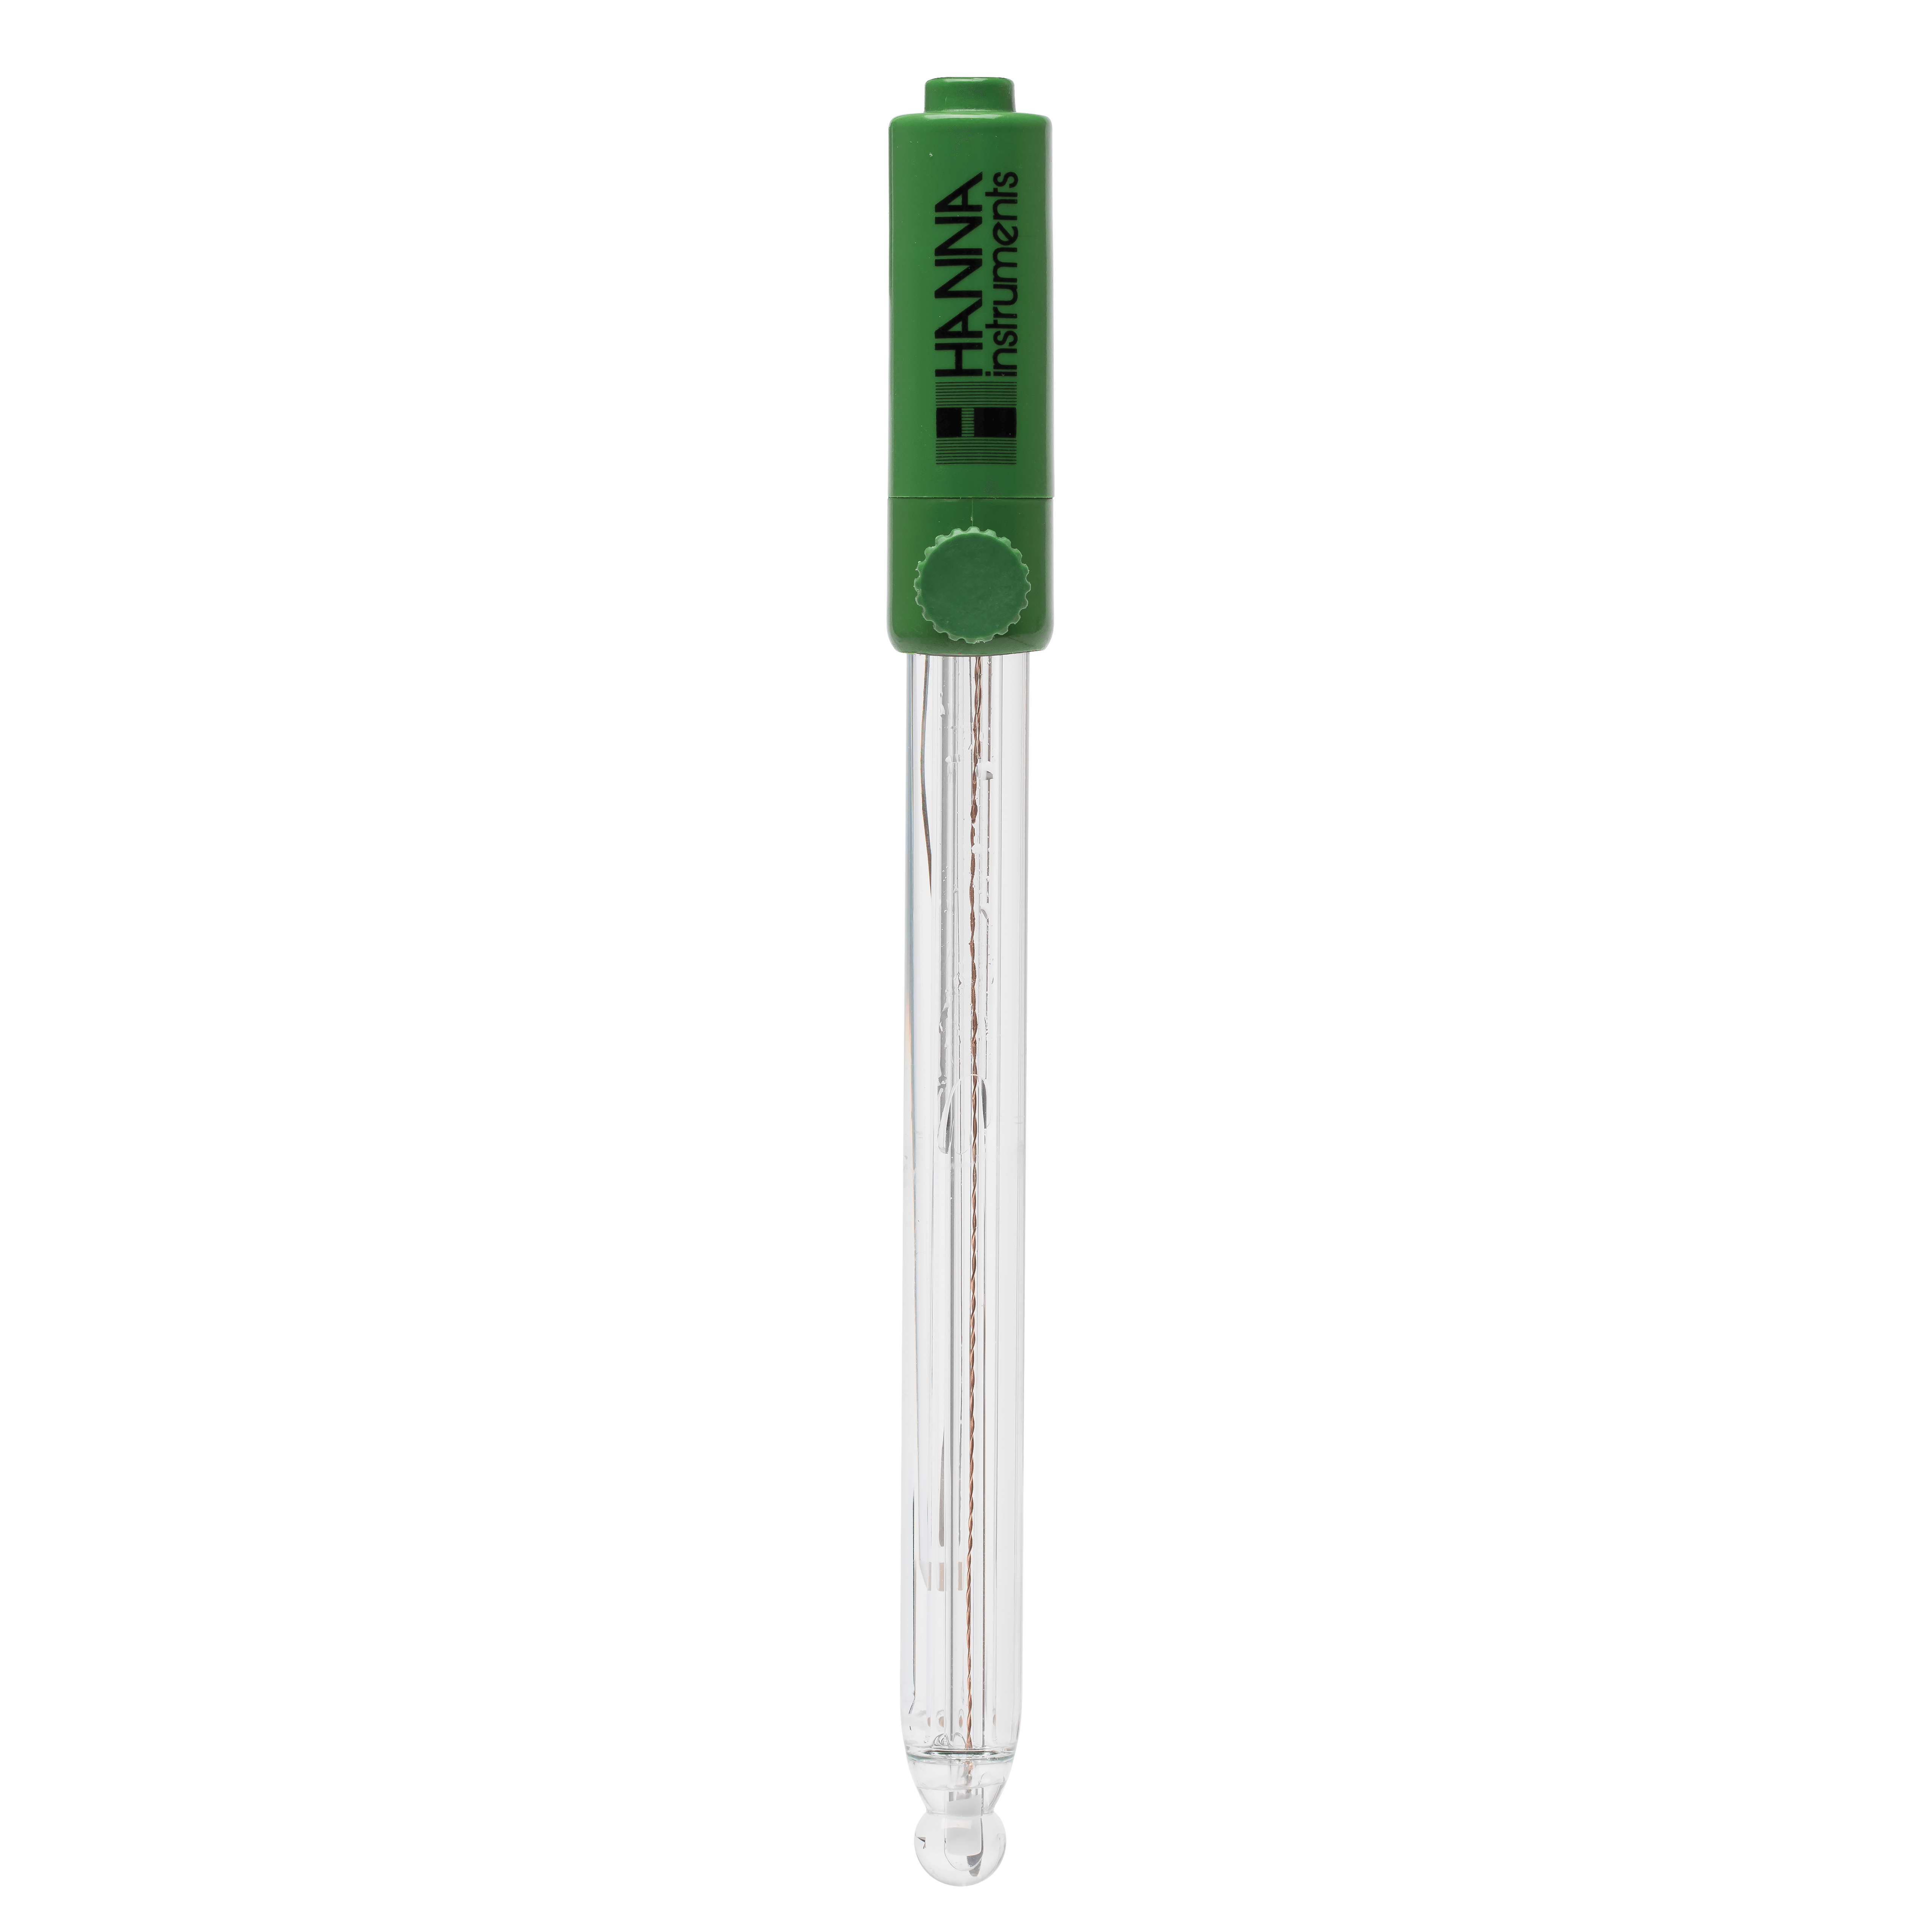 [:lt]HI11313 - Pakartotinai užpildomas stiklinis pH elektrodas su greito prijungimo DIN jungtimi[:en]HI11313 - Refillable Glass Body pH Electrode with Quick Connect DIN Connector[:]